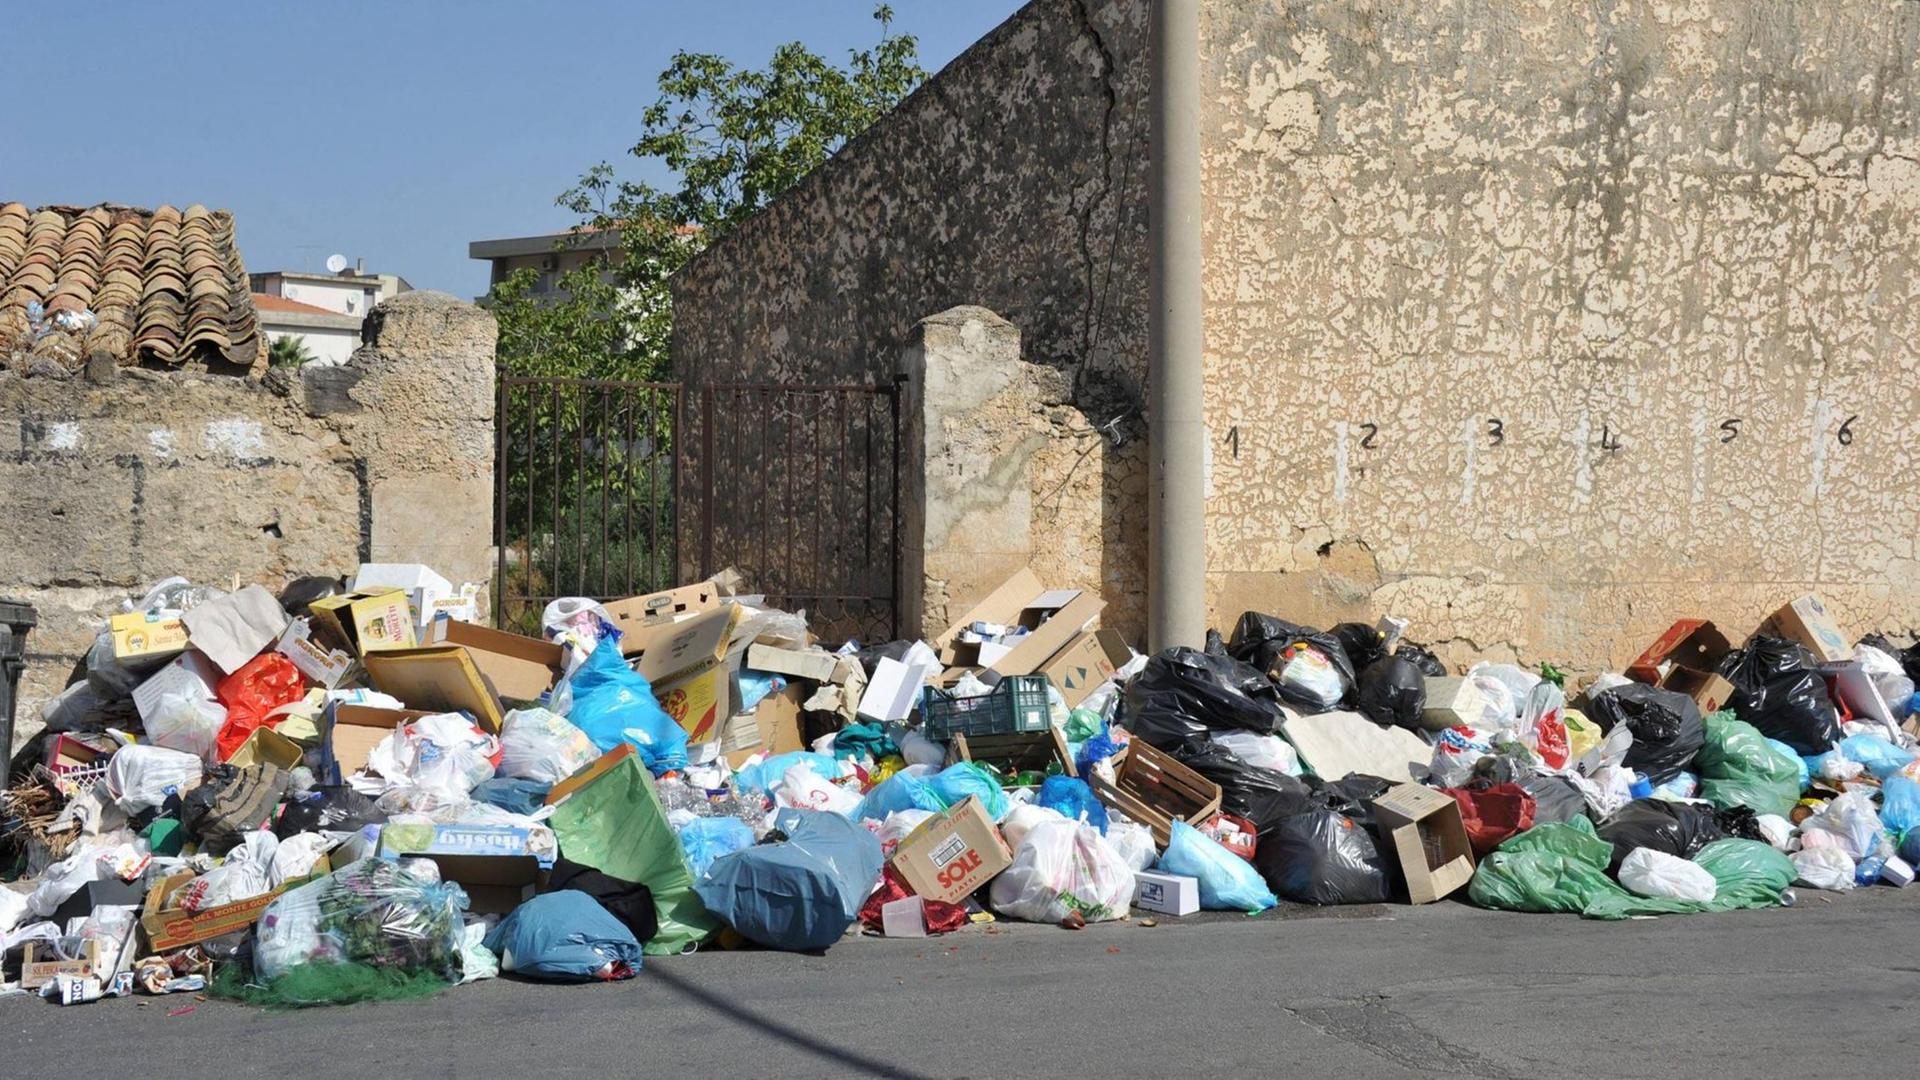 Italien - Sizilien lebt im eigenen Müll